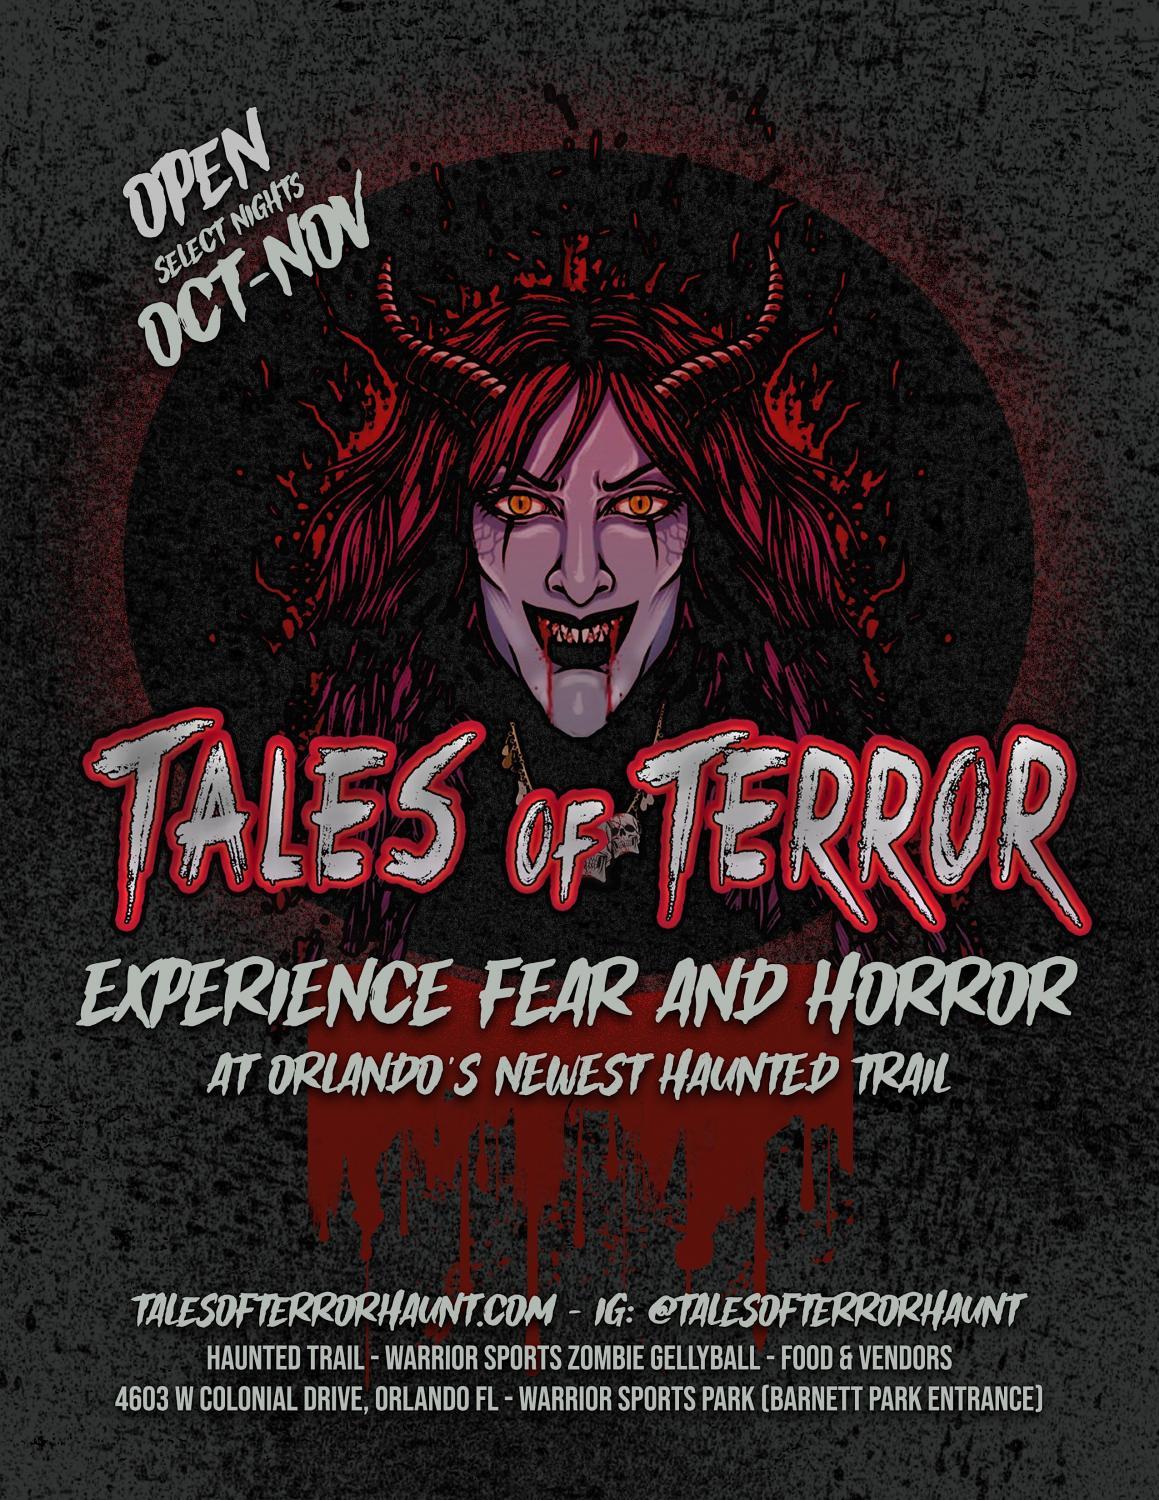 Tales of Terror Presents: The Wasteland Haunted Trail
Fri Oct 21, 8:00 PM - Fri Oct 21, 11:30 PM
in 2 days